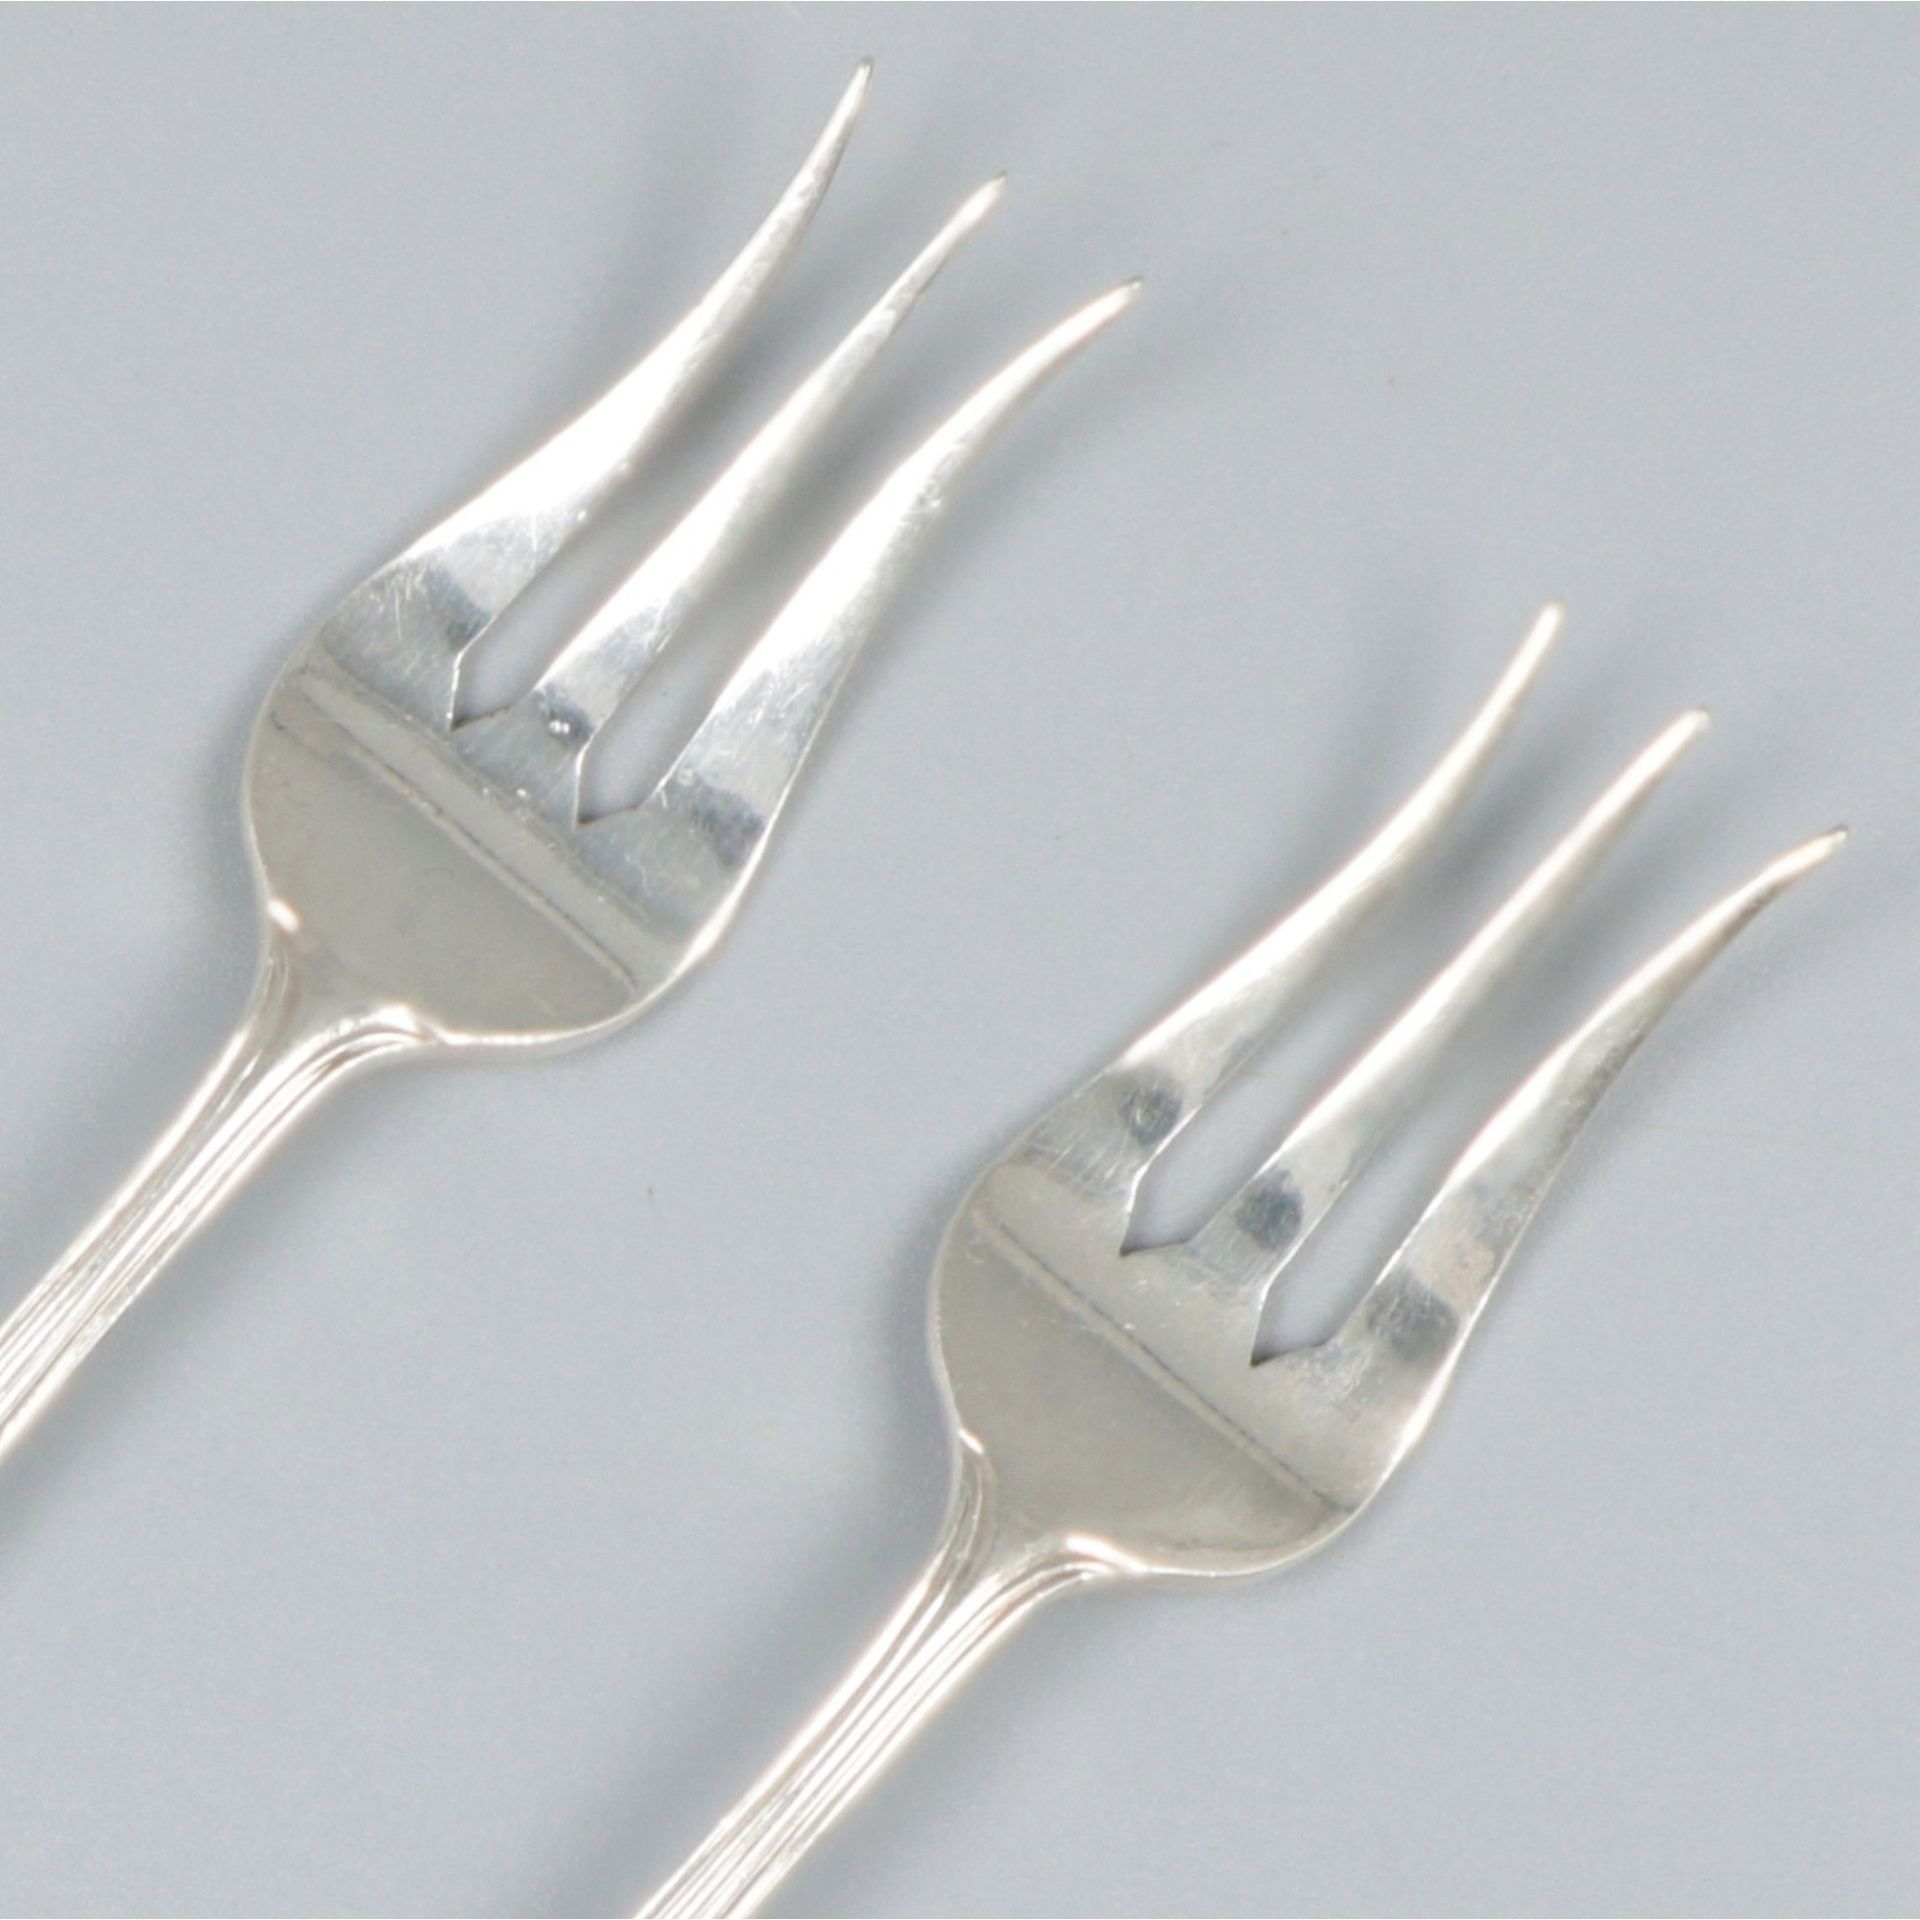 2-piece set meat forks "Hollands Rondfilet", silver. - Image 2 of 5